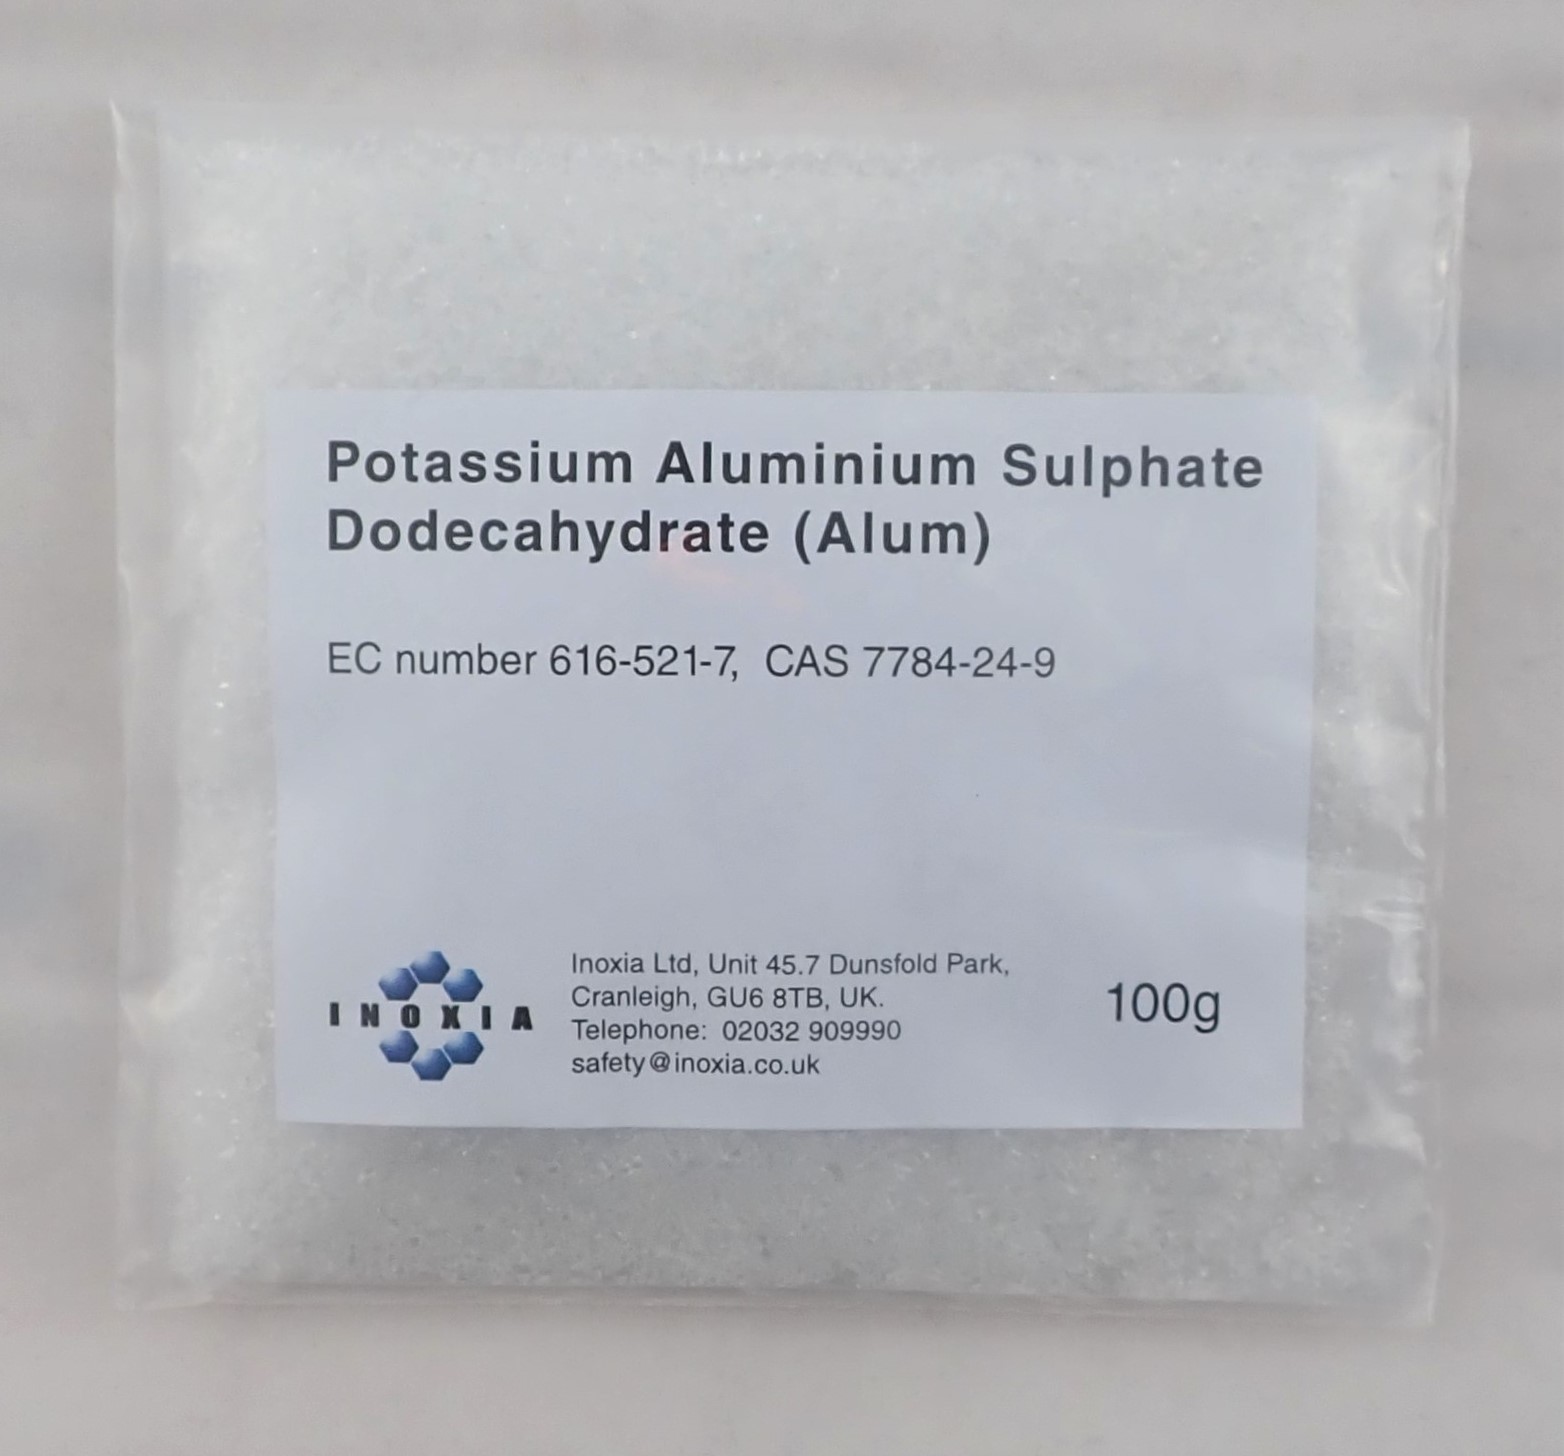 Omgeving Startpunt hoofdonderwijzer Buy Alum (Potassium Aluminium Sulphate) at Inoxia Ltd